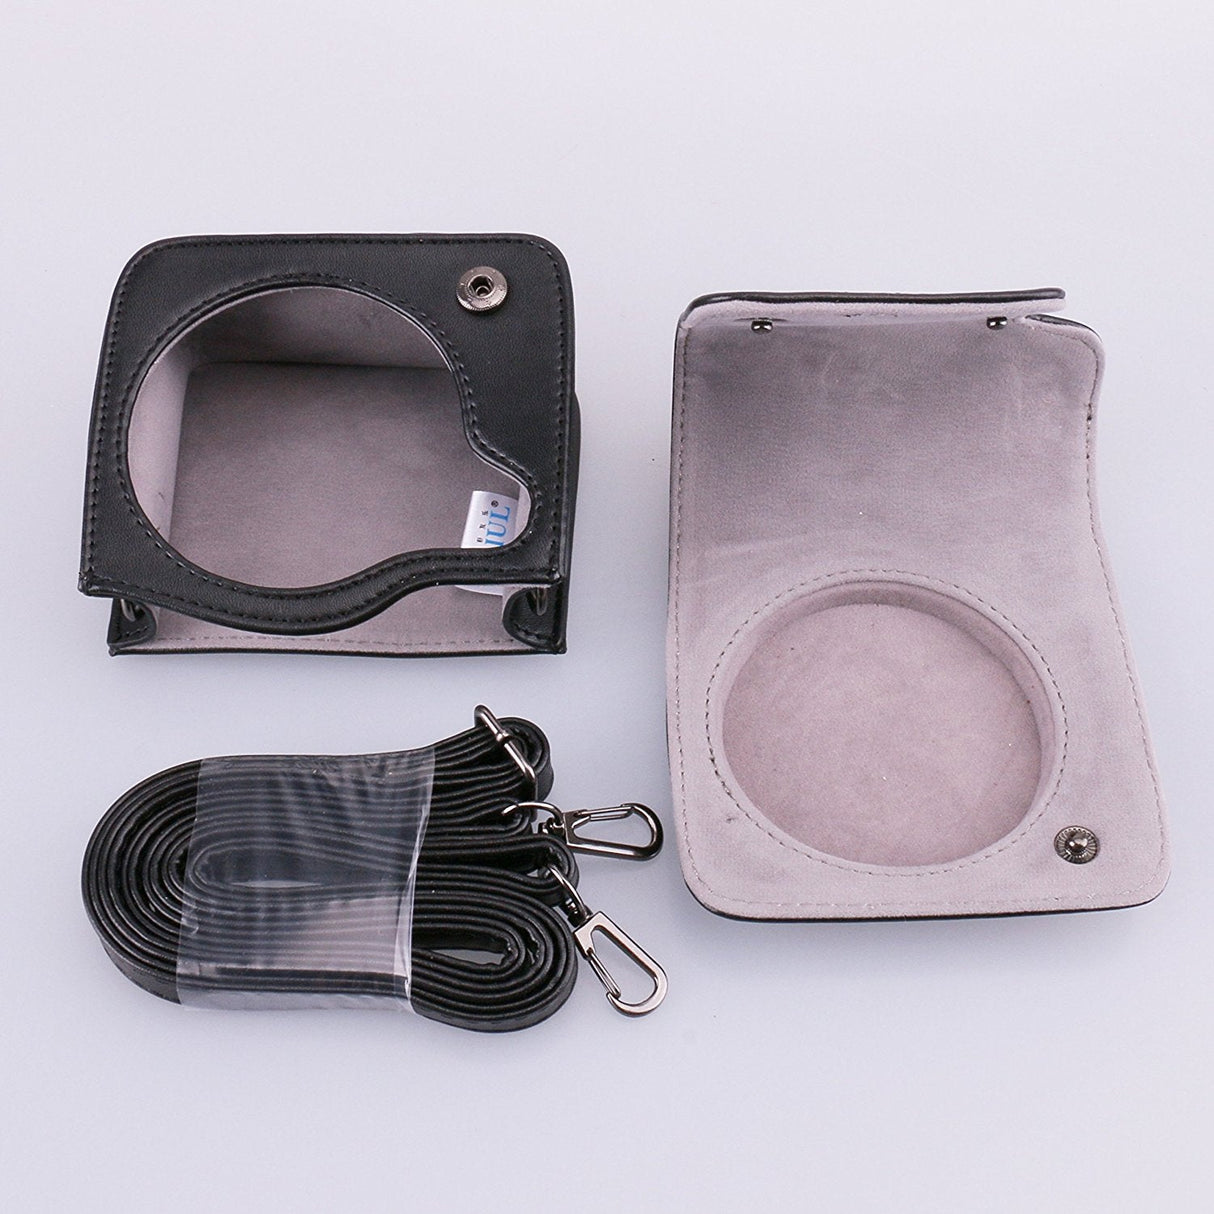 [Fujifilm Instax Mini 70 Case]  CAIUL Comprehensive Protection Instax Mini 70 Camera Case Bag With Soft PU Leather Material ( black )